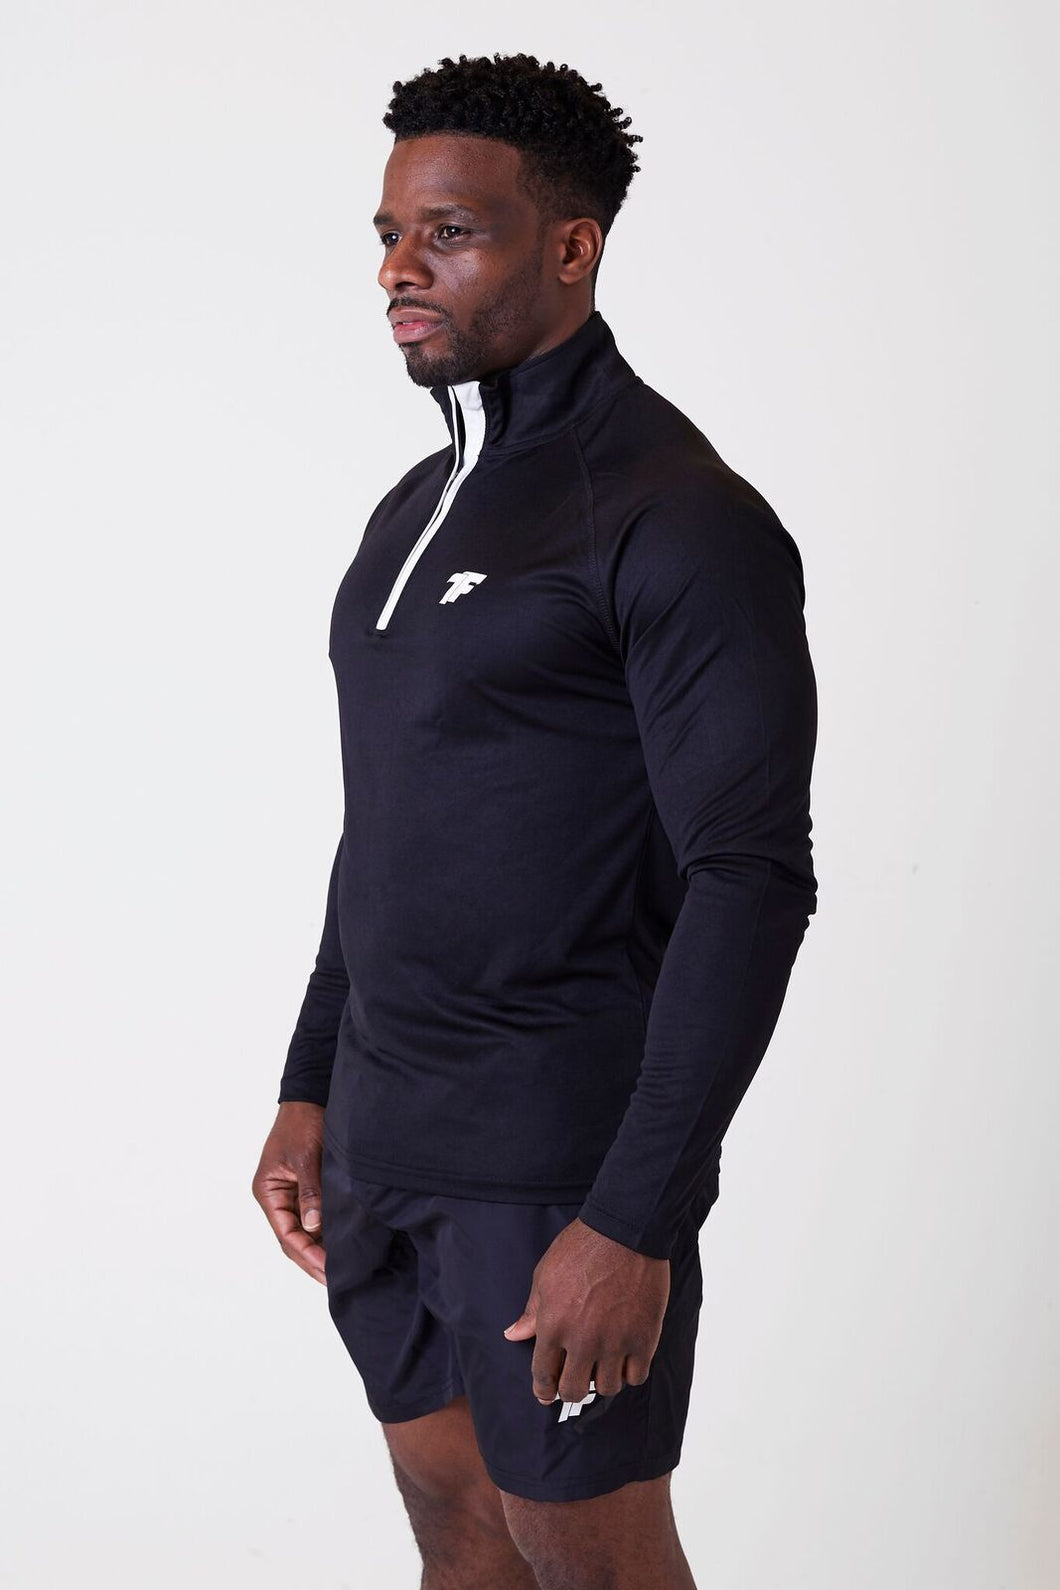 Mens gym full sleeve black quarter zip tshirt of the brand true form uk